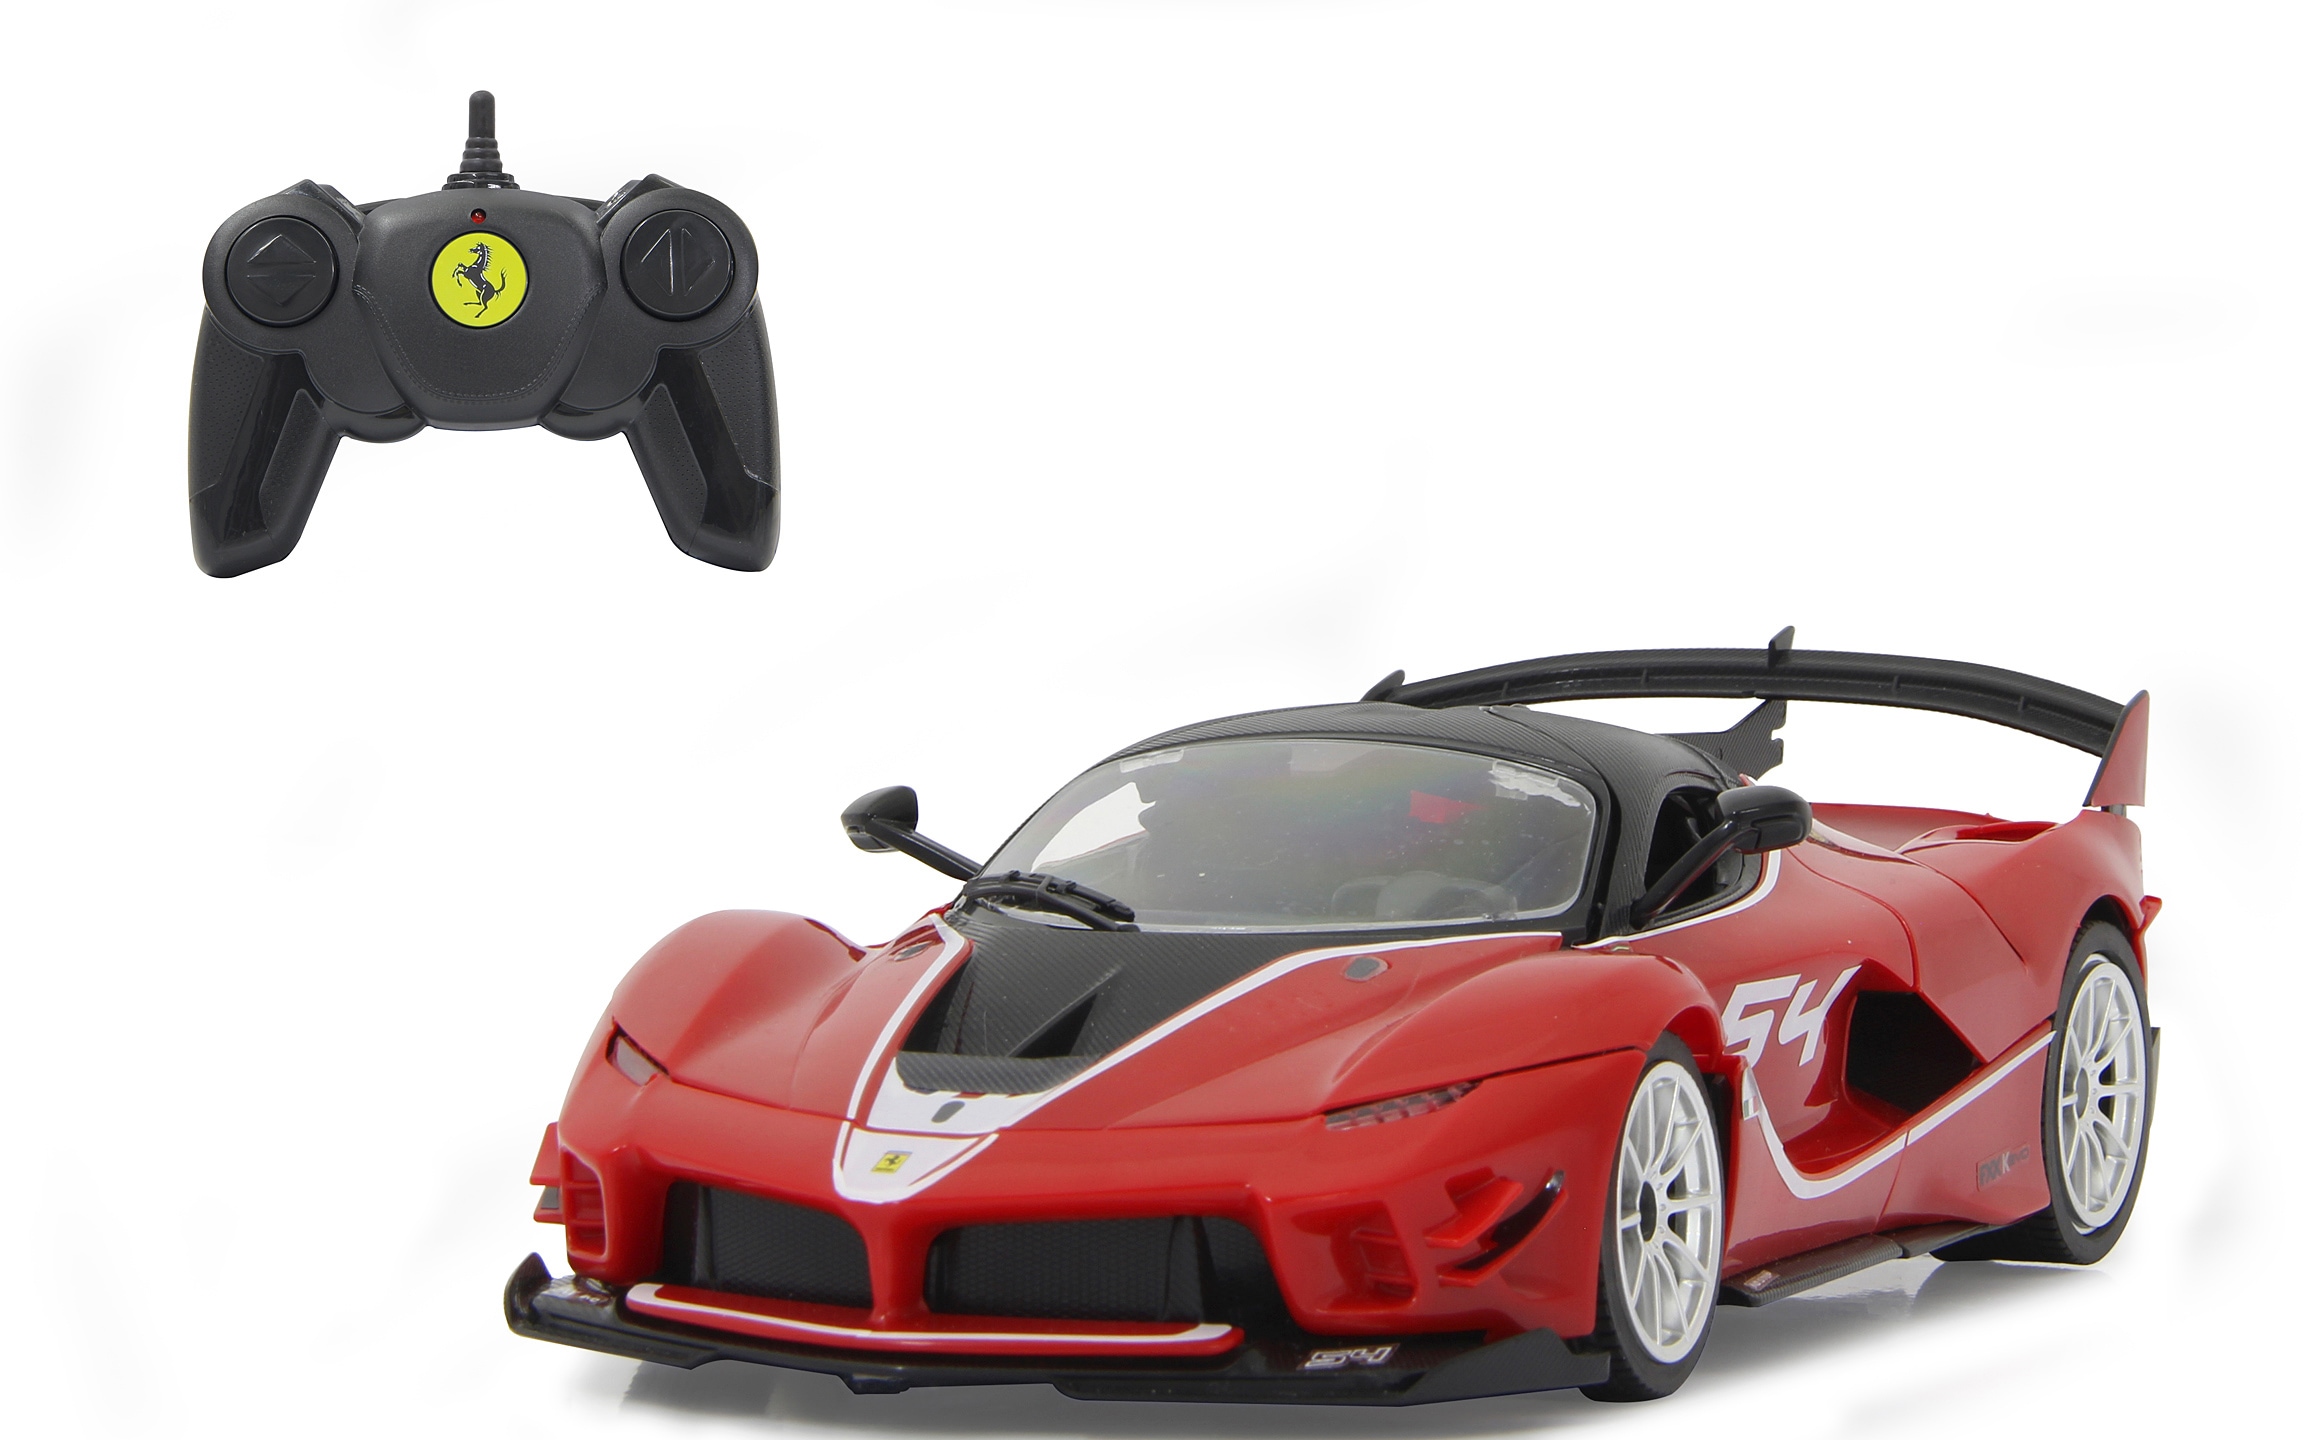 Modellbausatz »Ferrari FXX K Evo 1:18, rot - 2,4 GHz«, 1:18